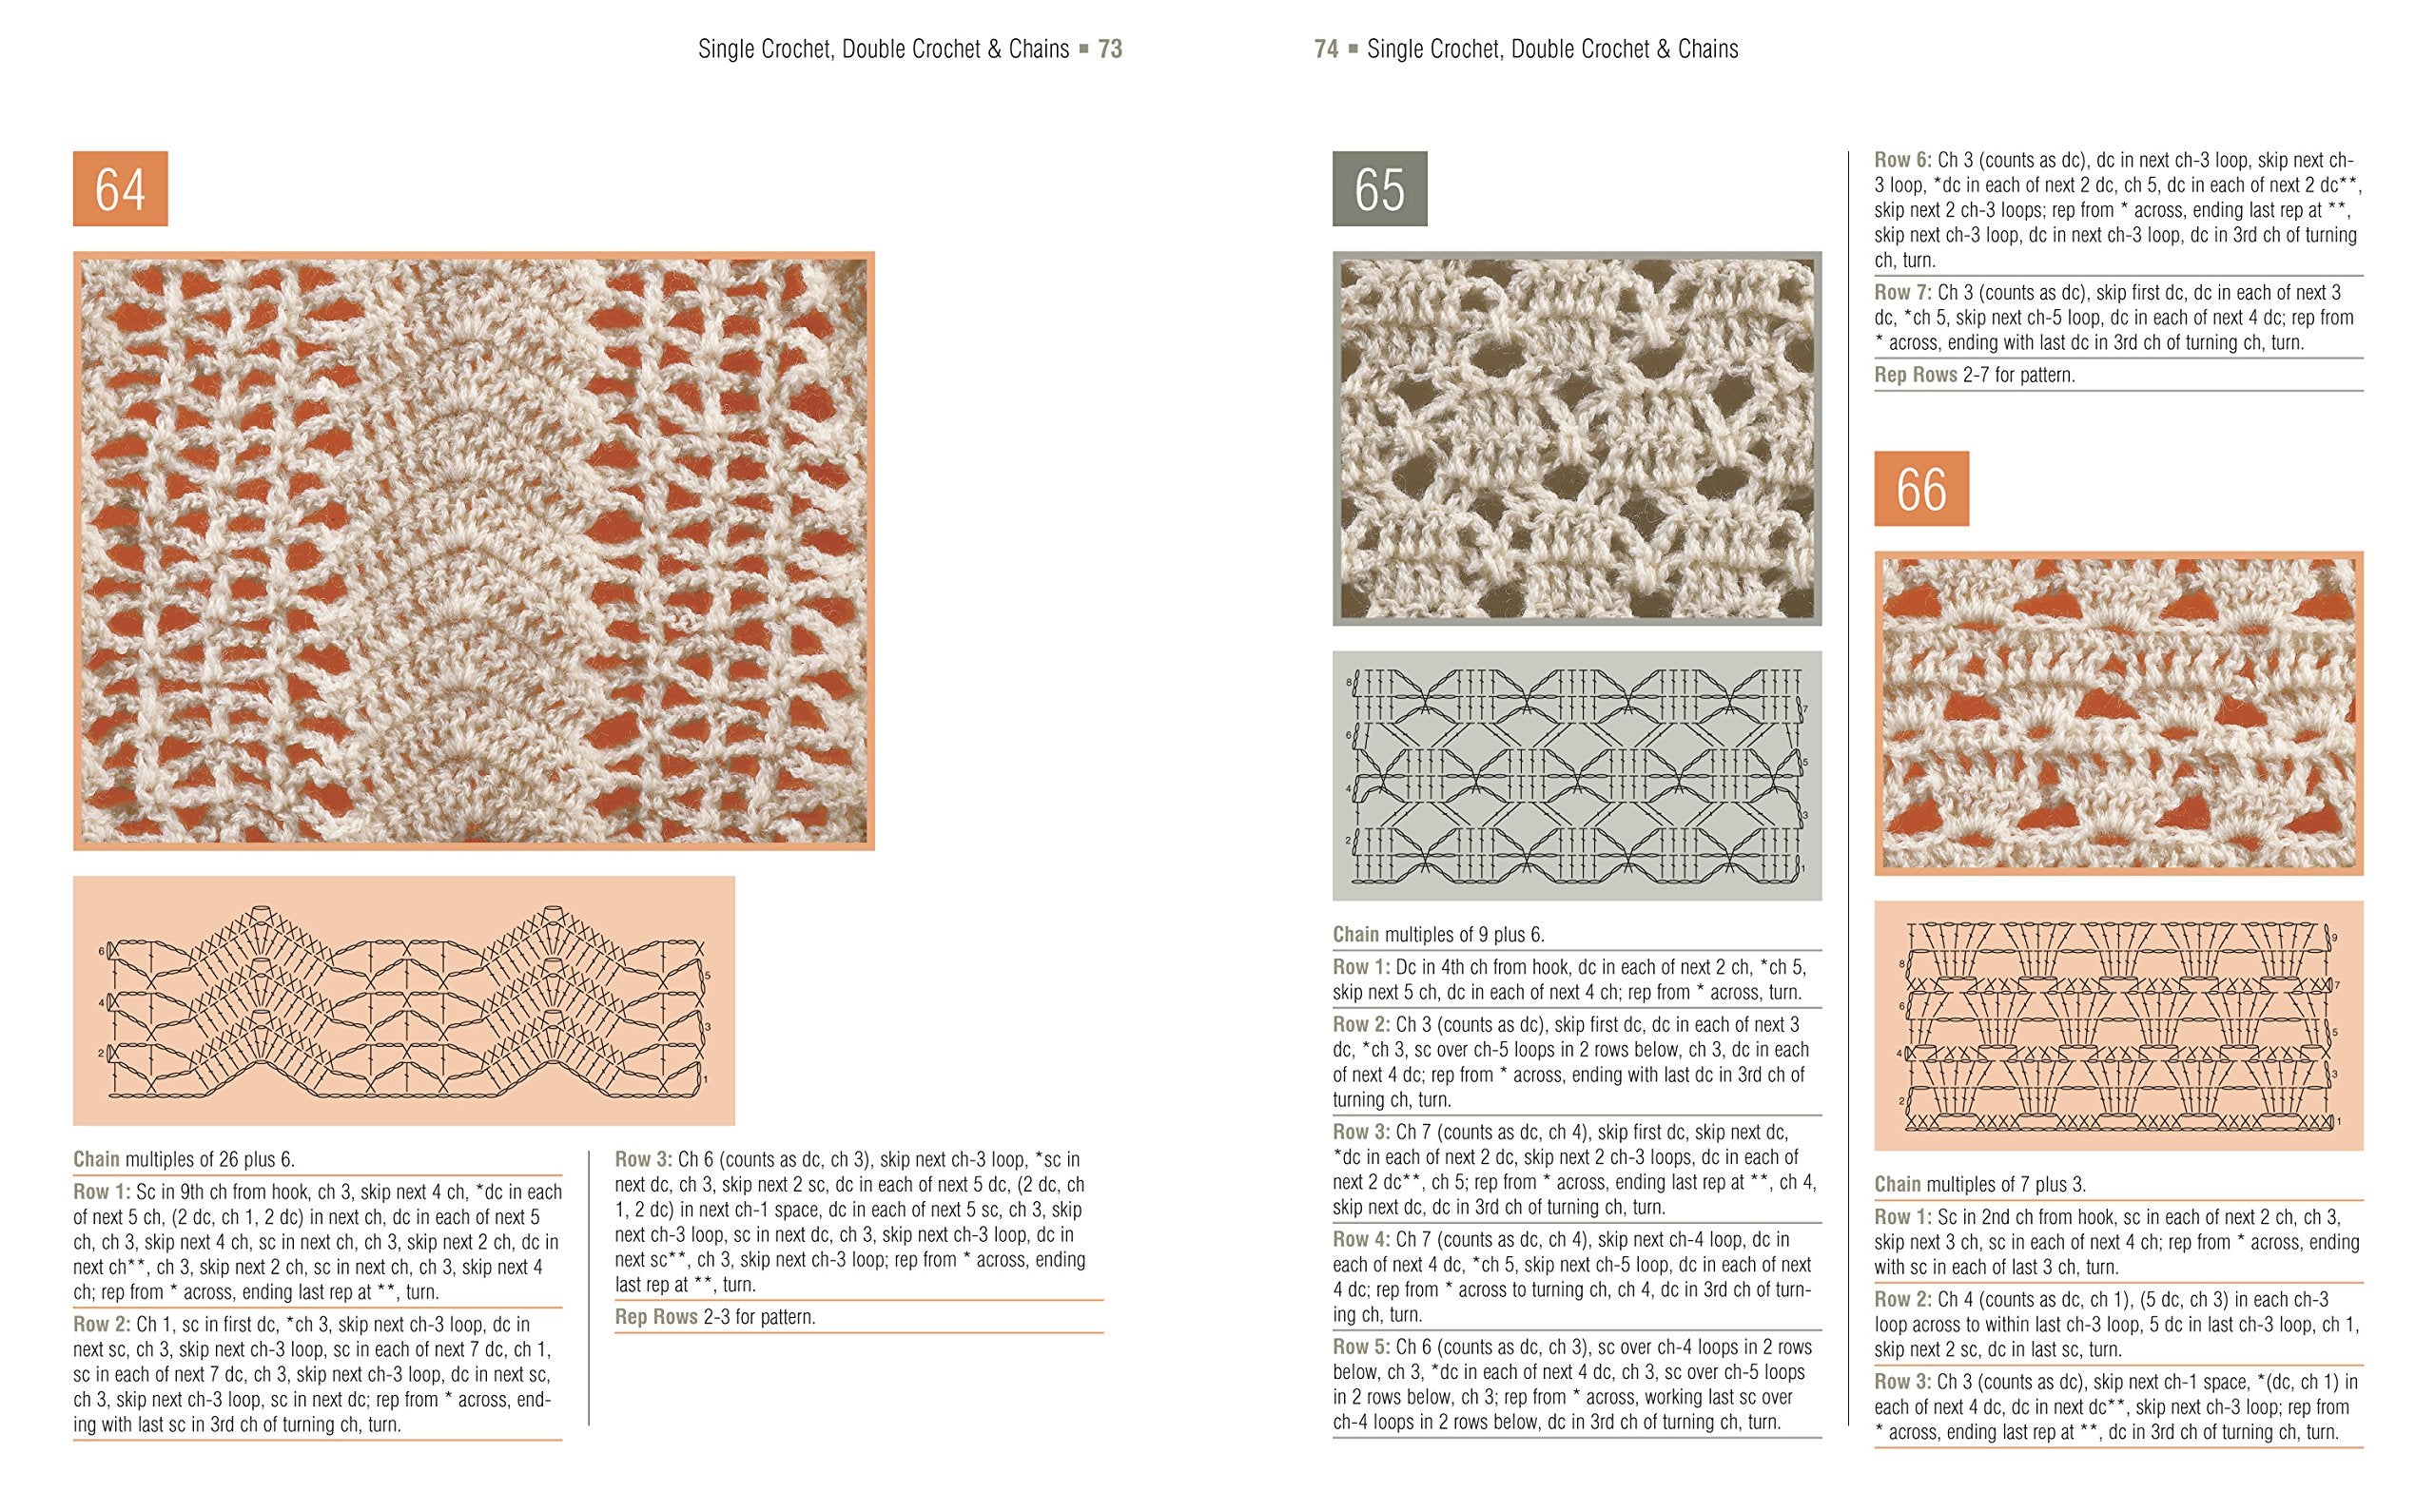 The Complete Book of Crochet Stitch Designs: 500 Classic & Original Patterns by Linda P. Schapper